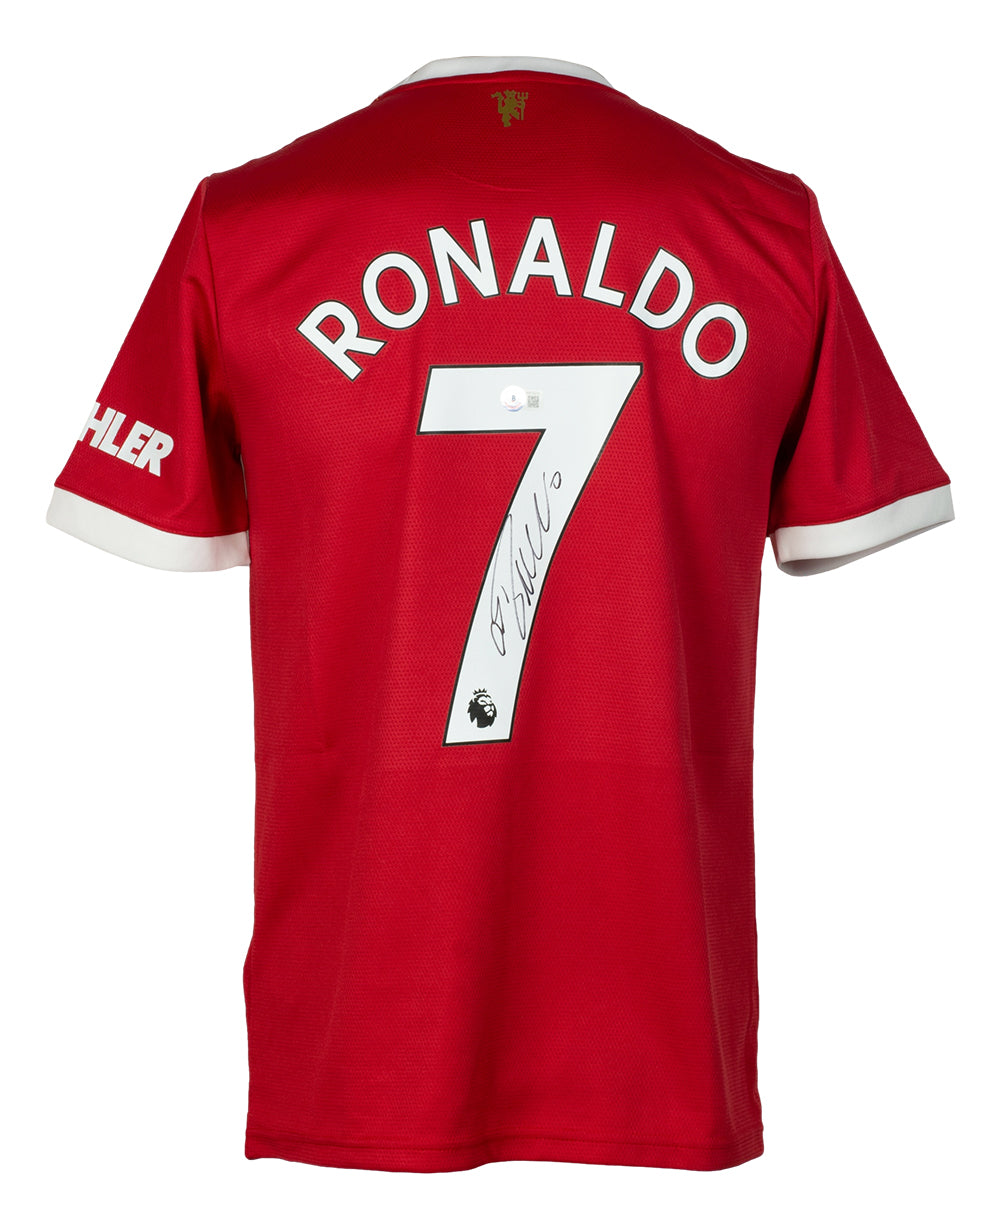 ronaldo jersey united